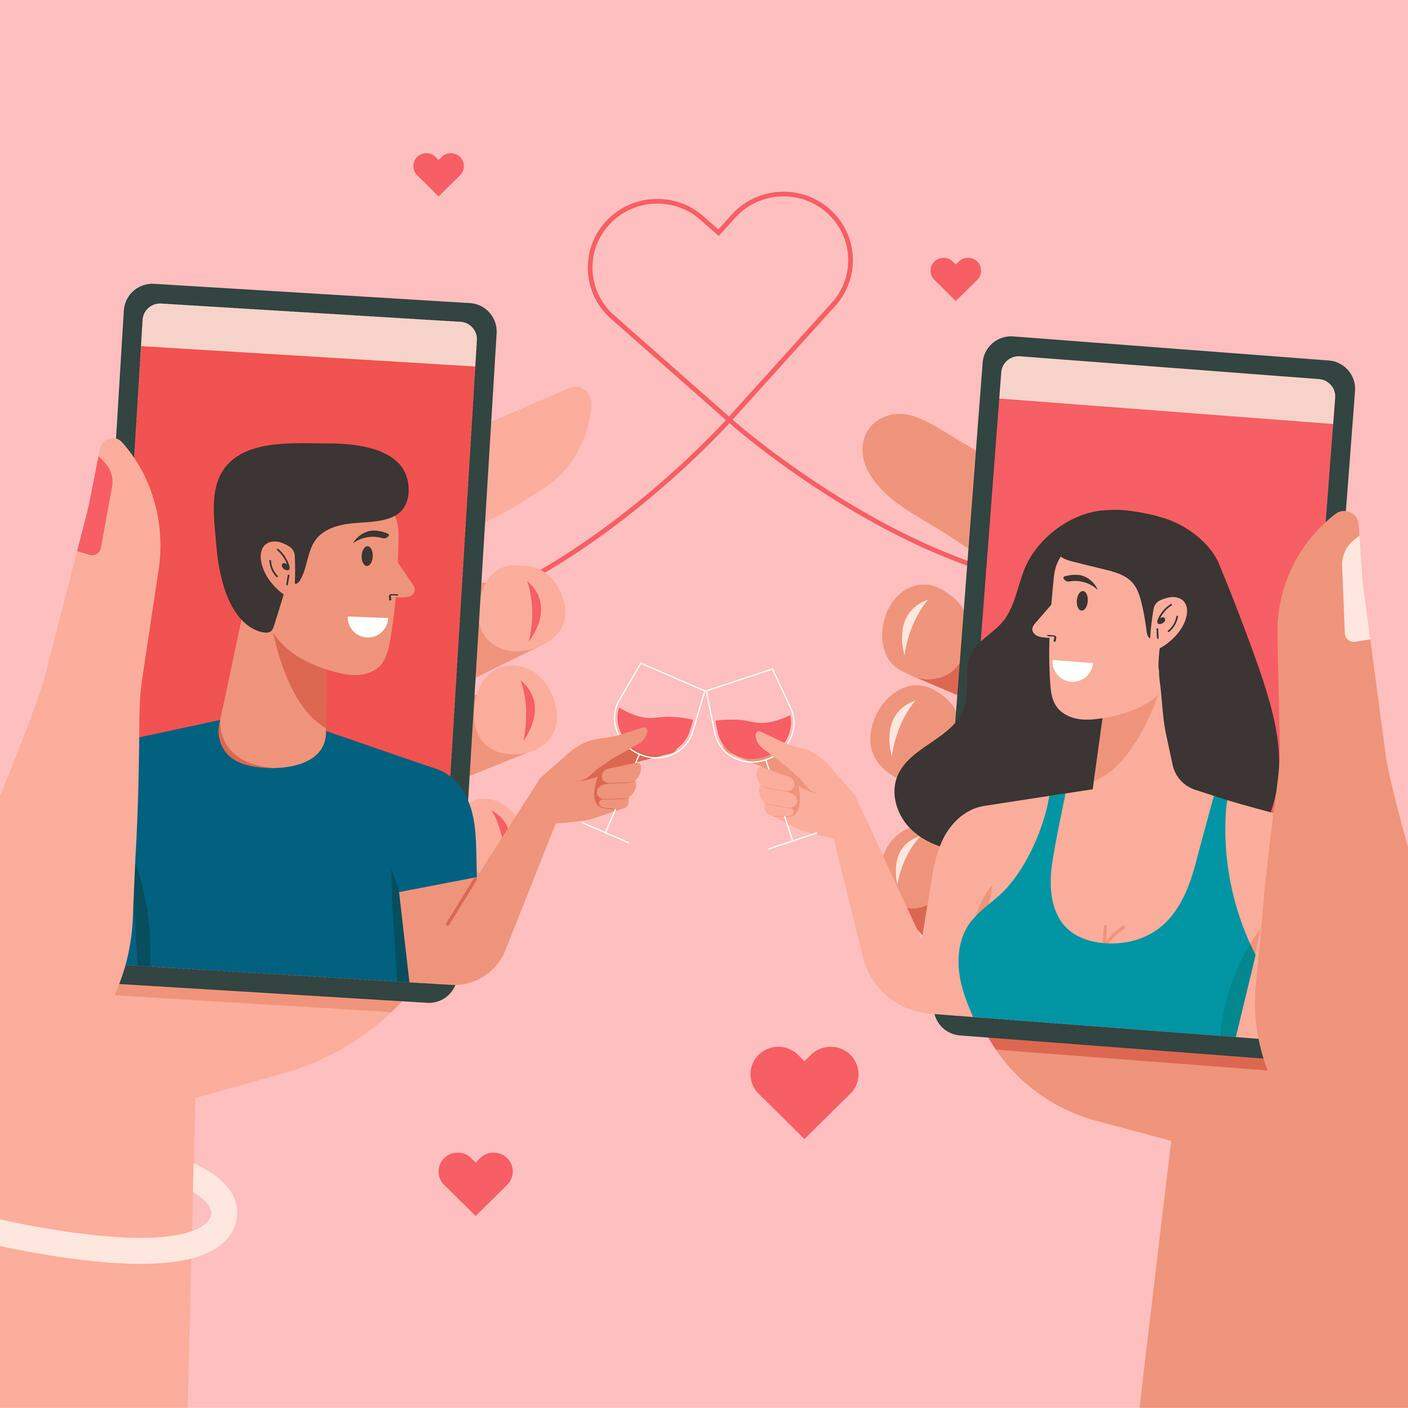 web dating tinder relazioni online amori a distanza